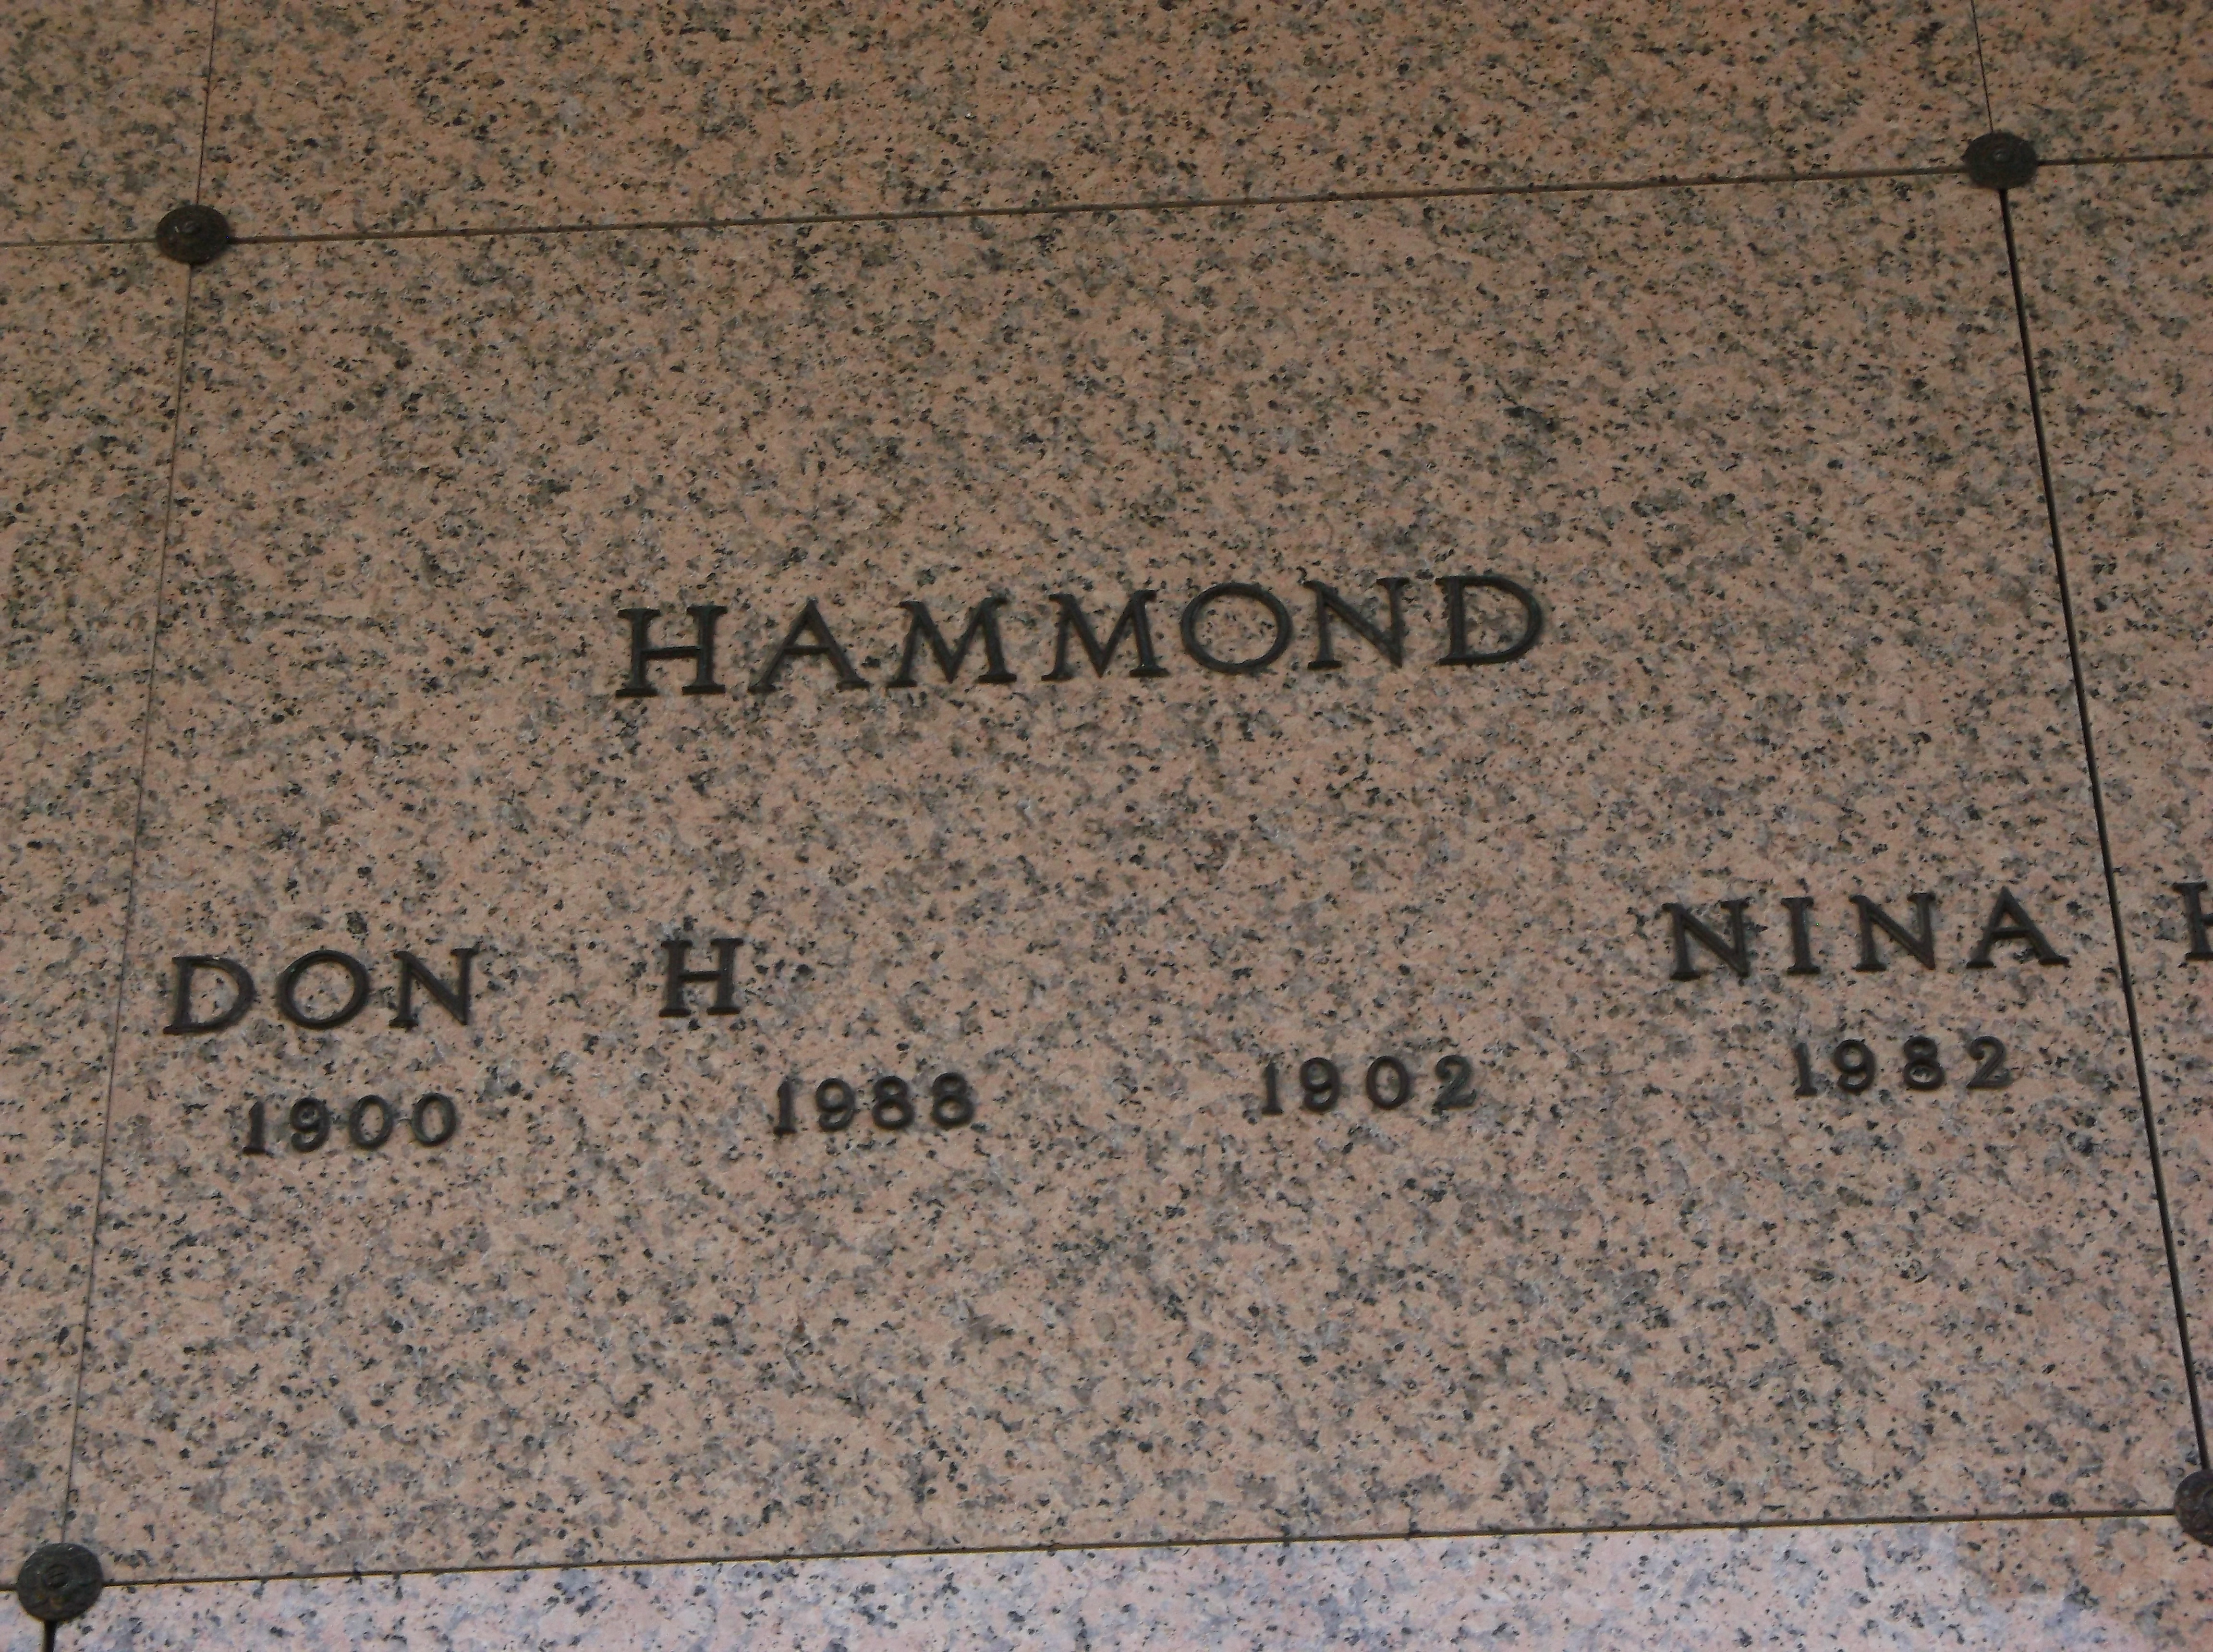 Don H Hammond